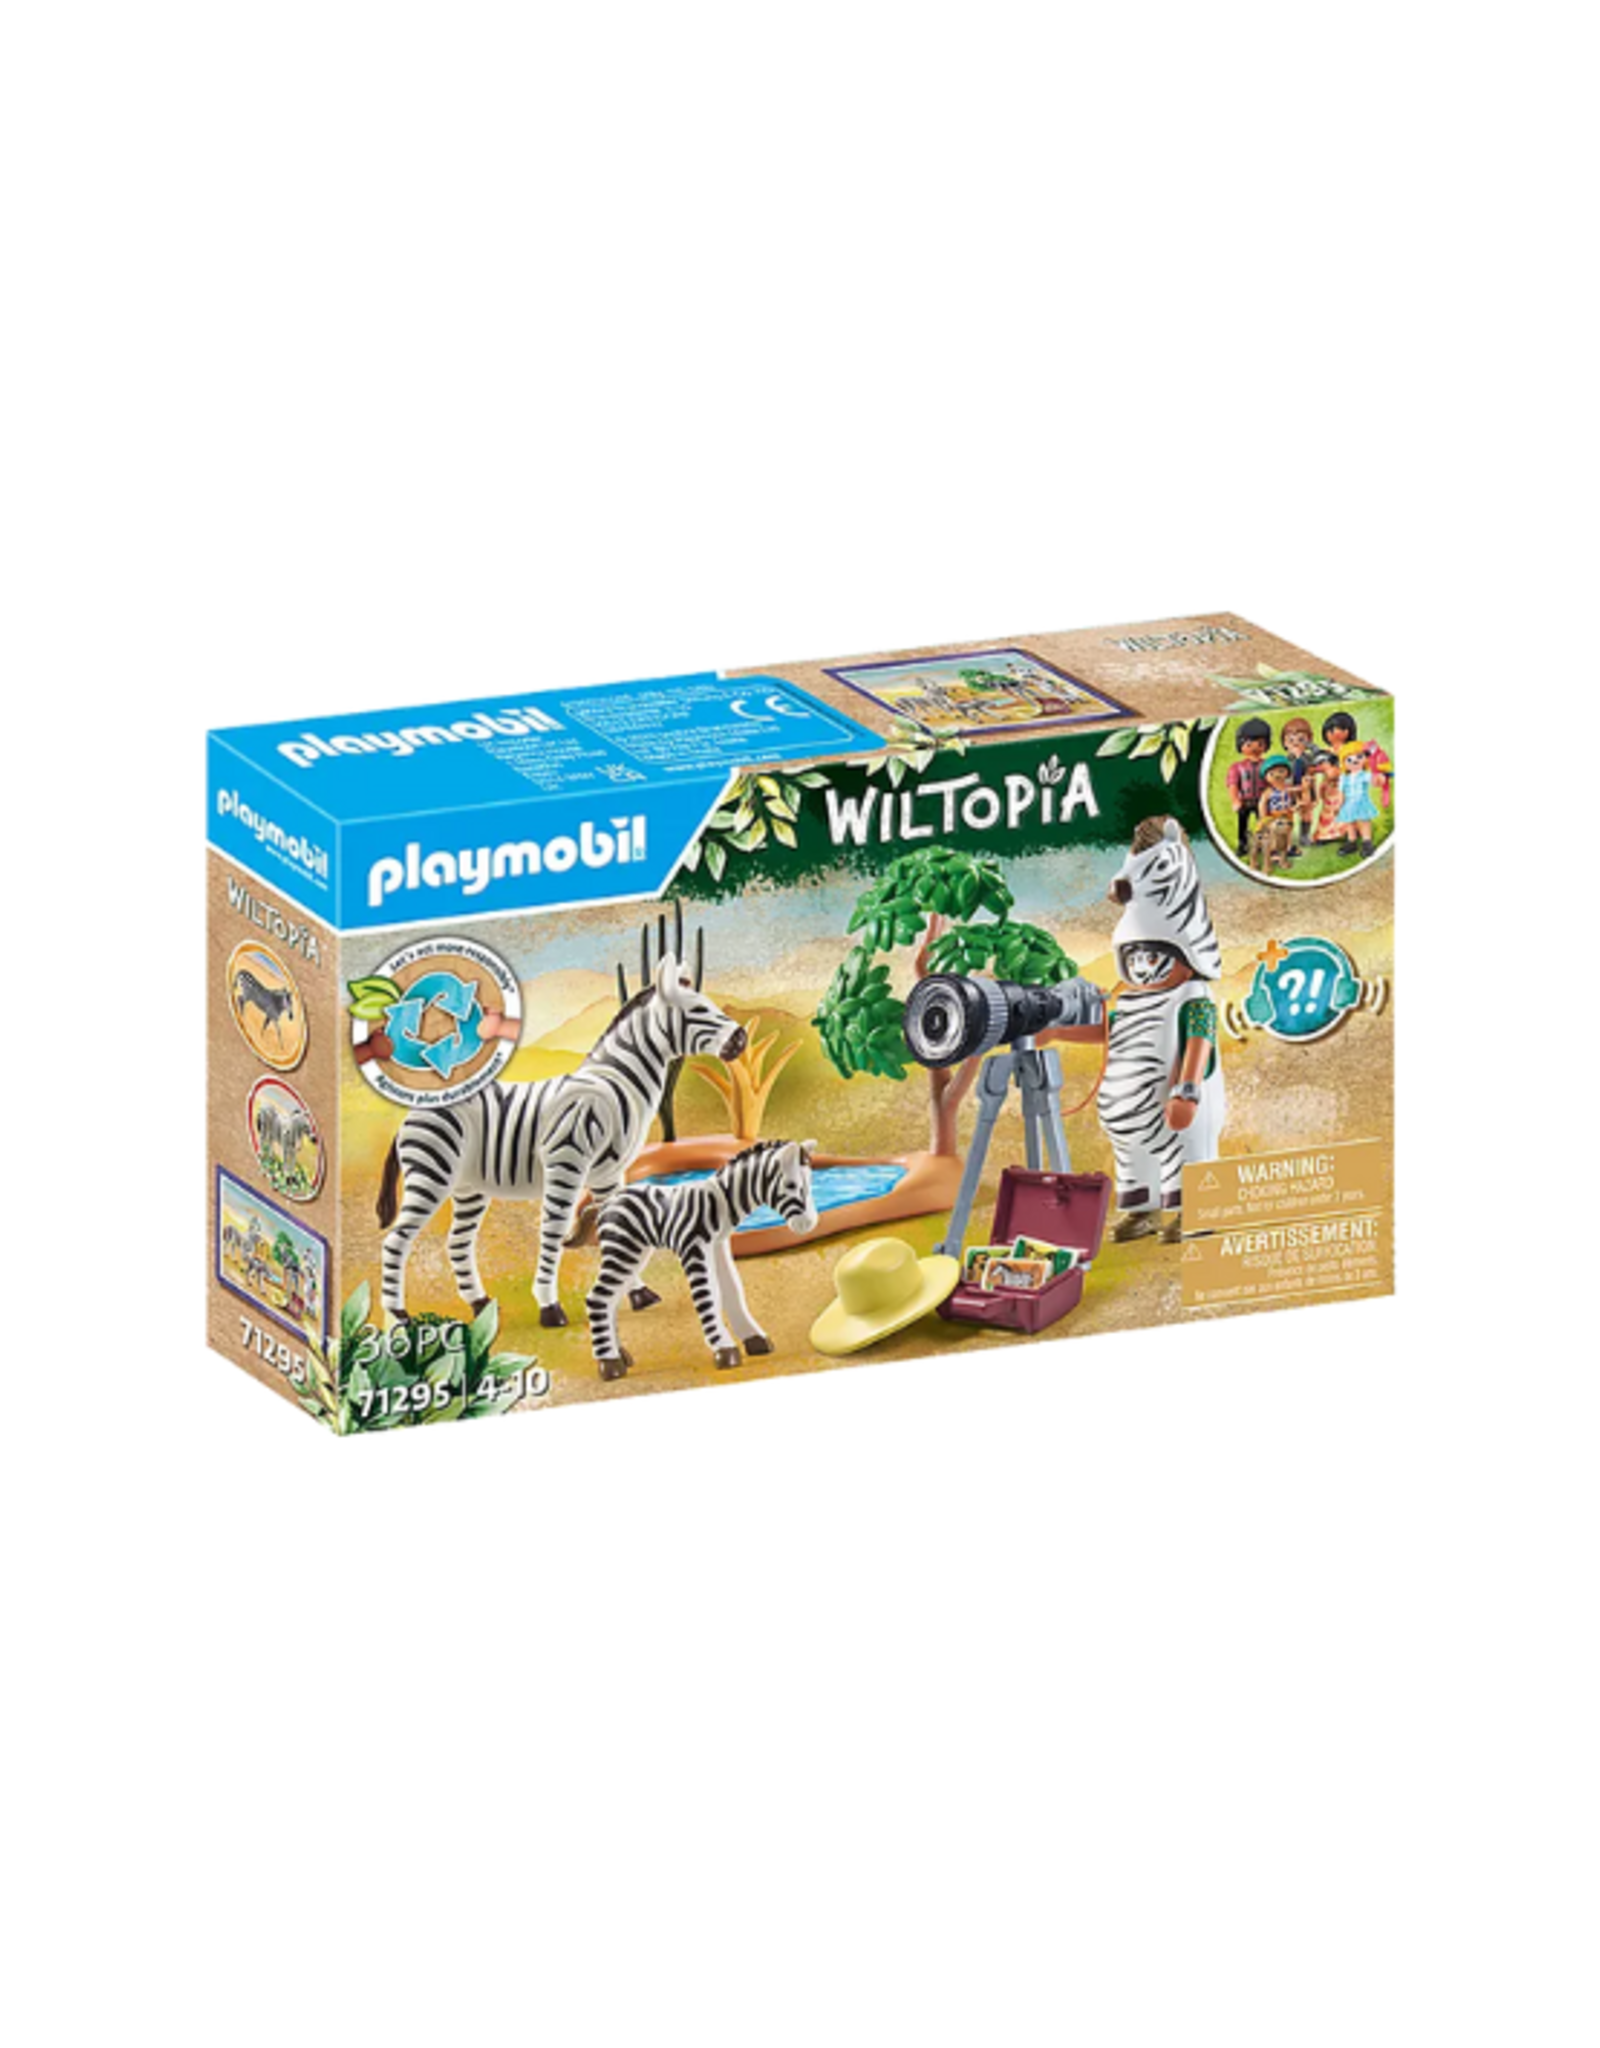 Playmobil Playmobil - Wiltopia - 71295 - Animal Photographer